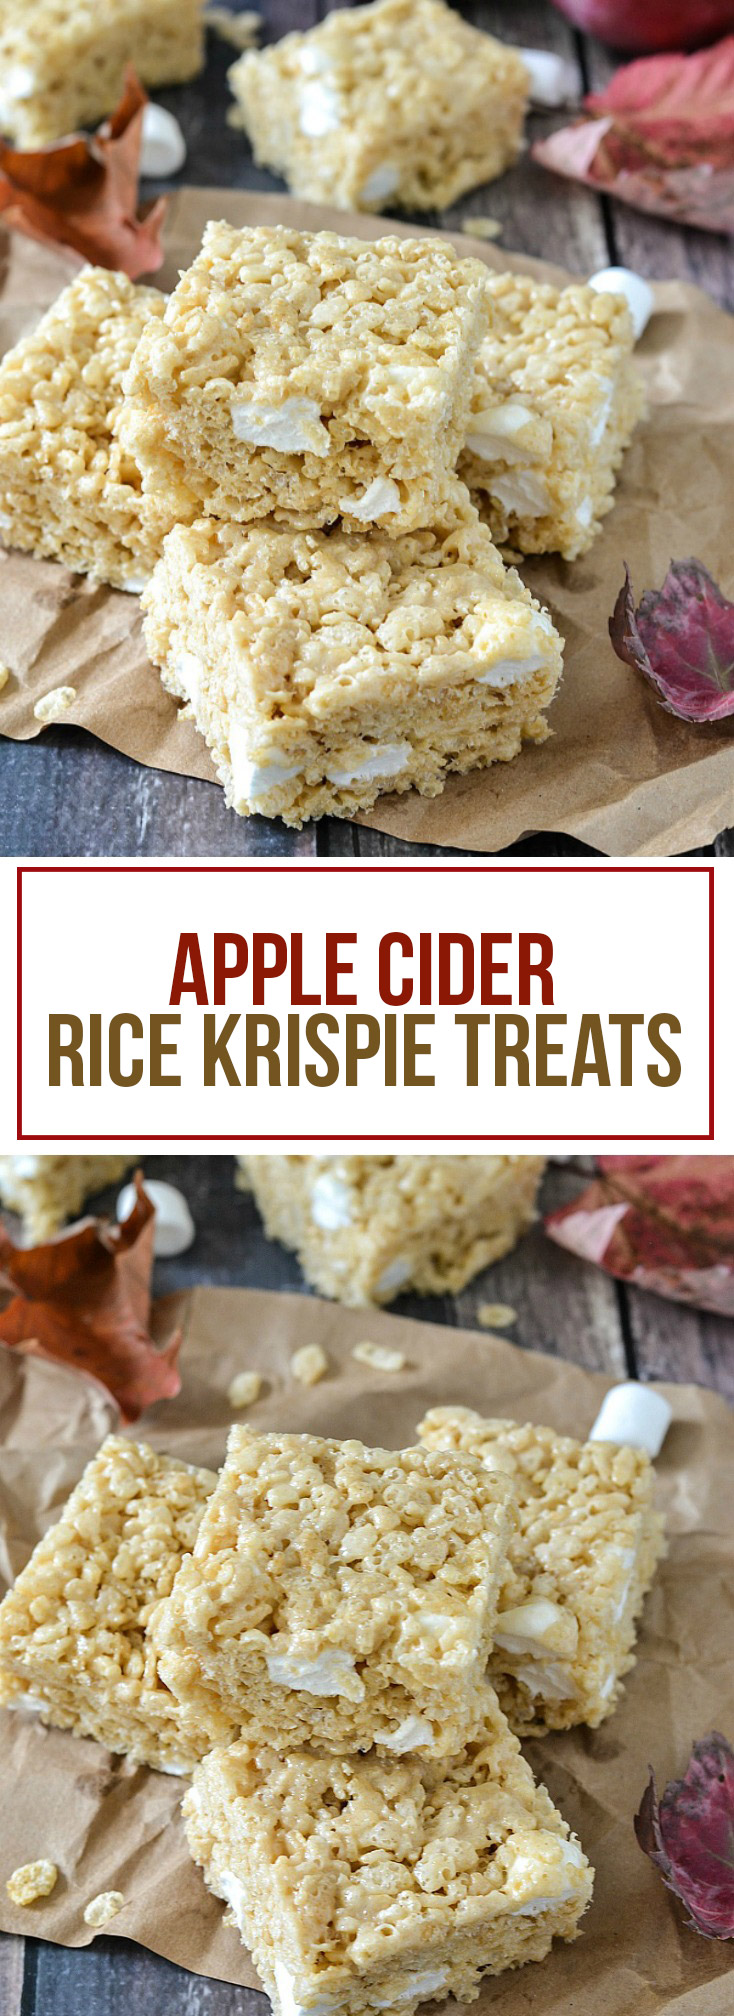 Apple Cider Rice Krispie Treats - www.motherthyme.com